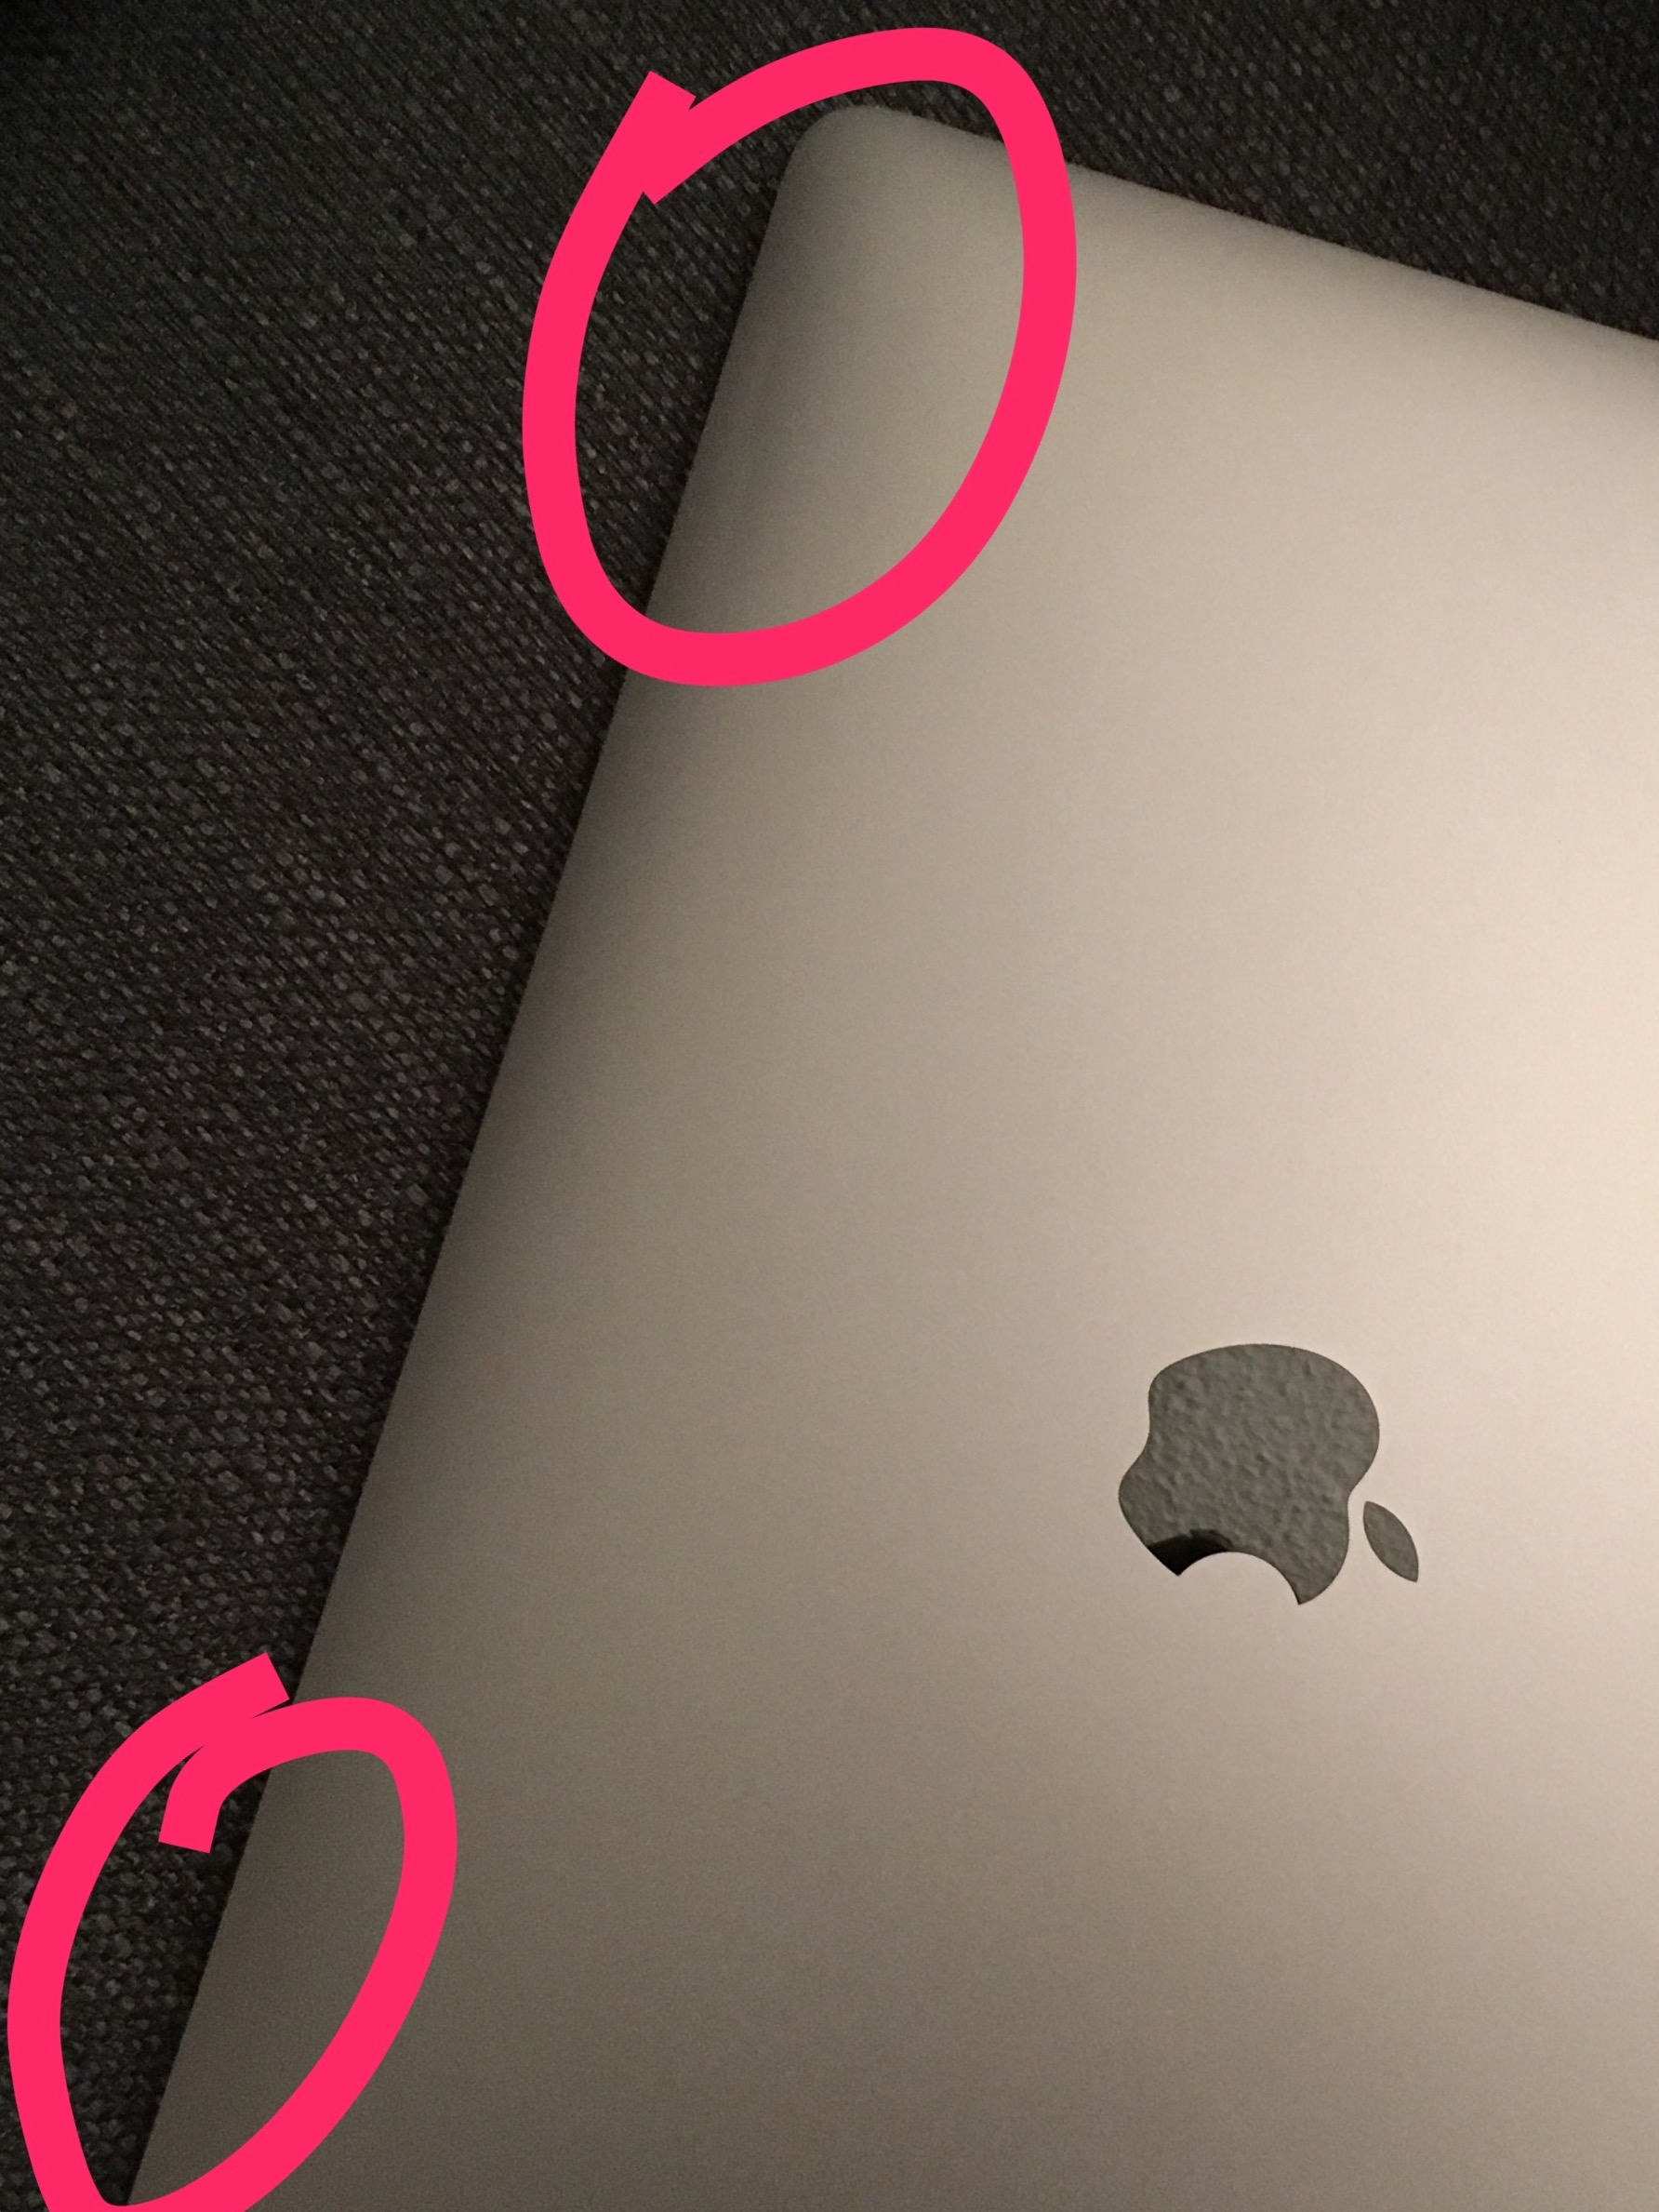 apple dented my macbook pro